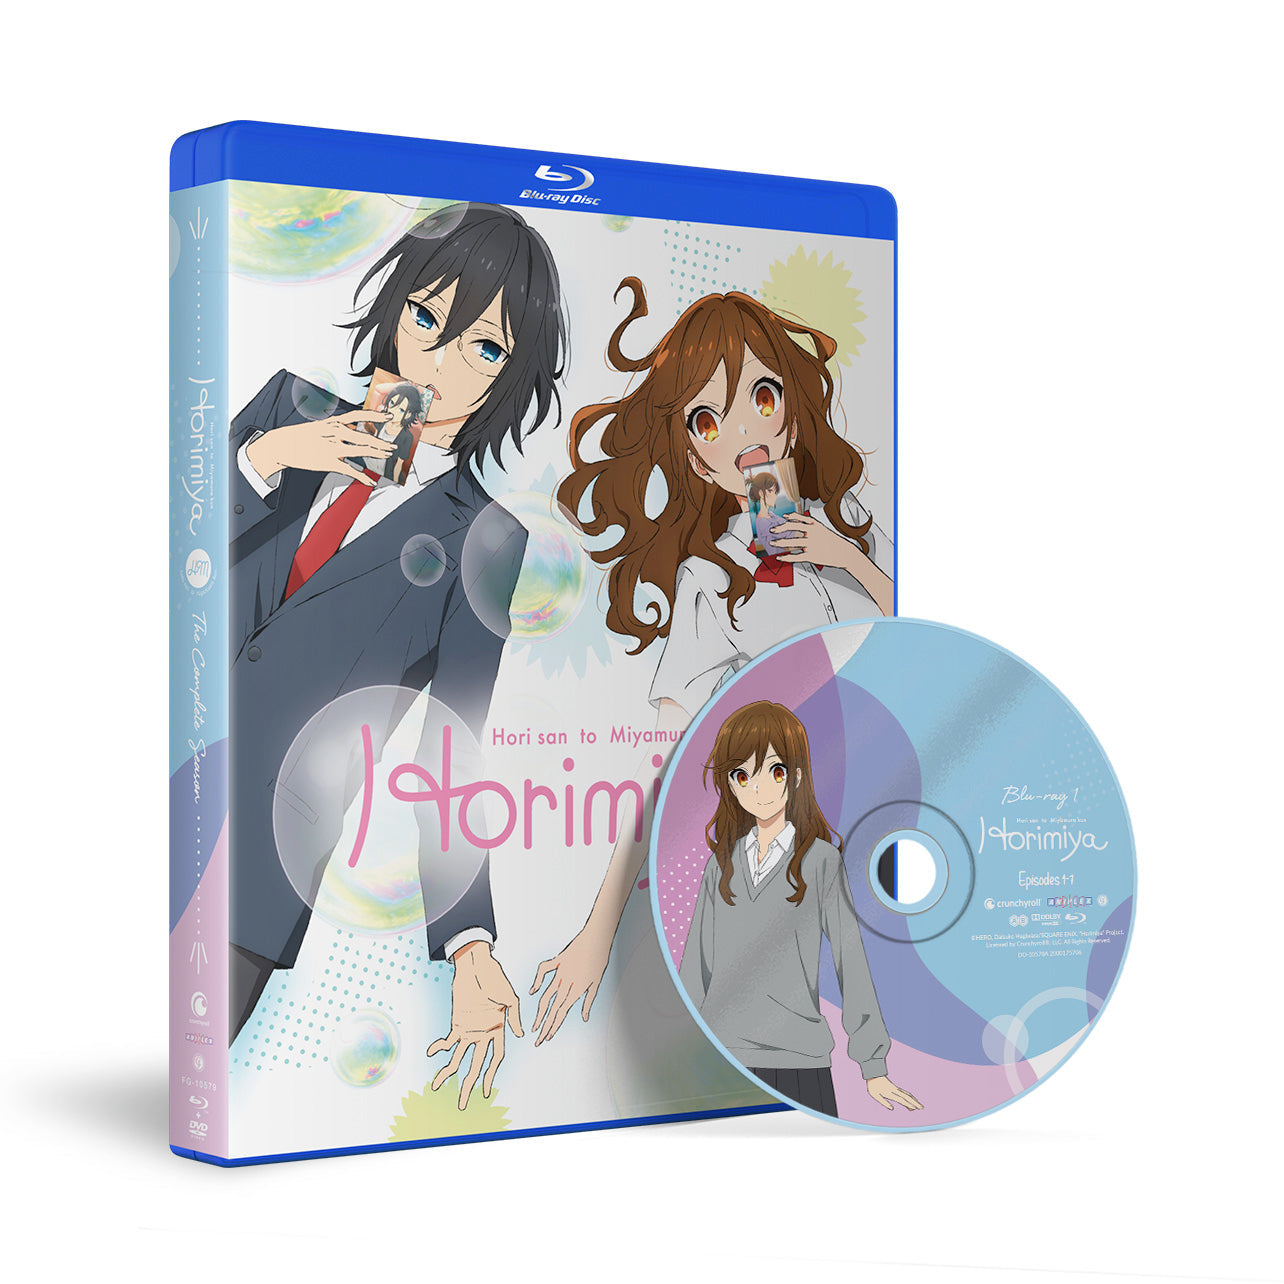 Horimiya - The Complete Season - BD/DVD - LE image count 2